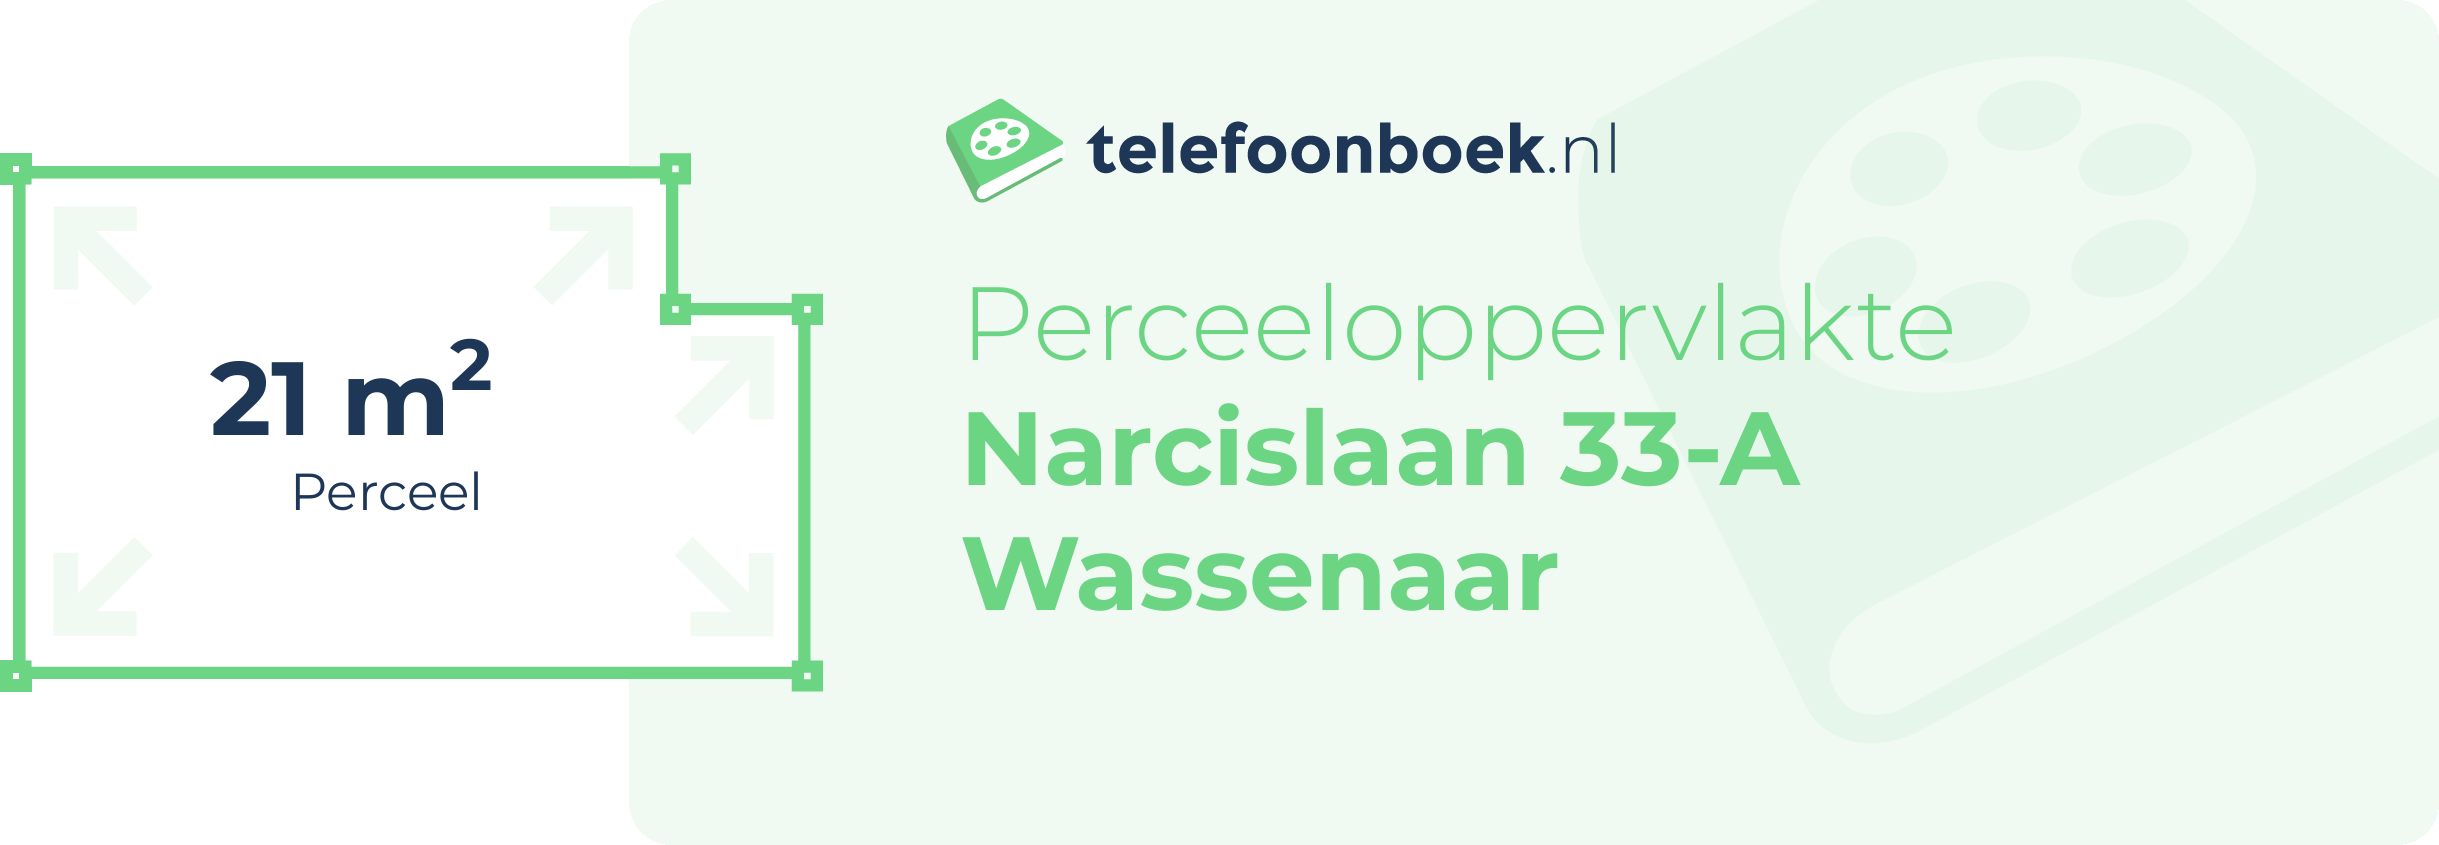 Perceeloppervlakte Narcislaan 33-A Wassenaar